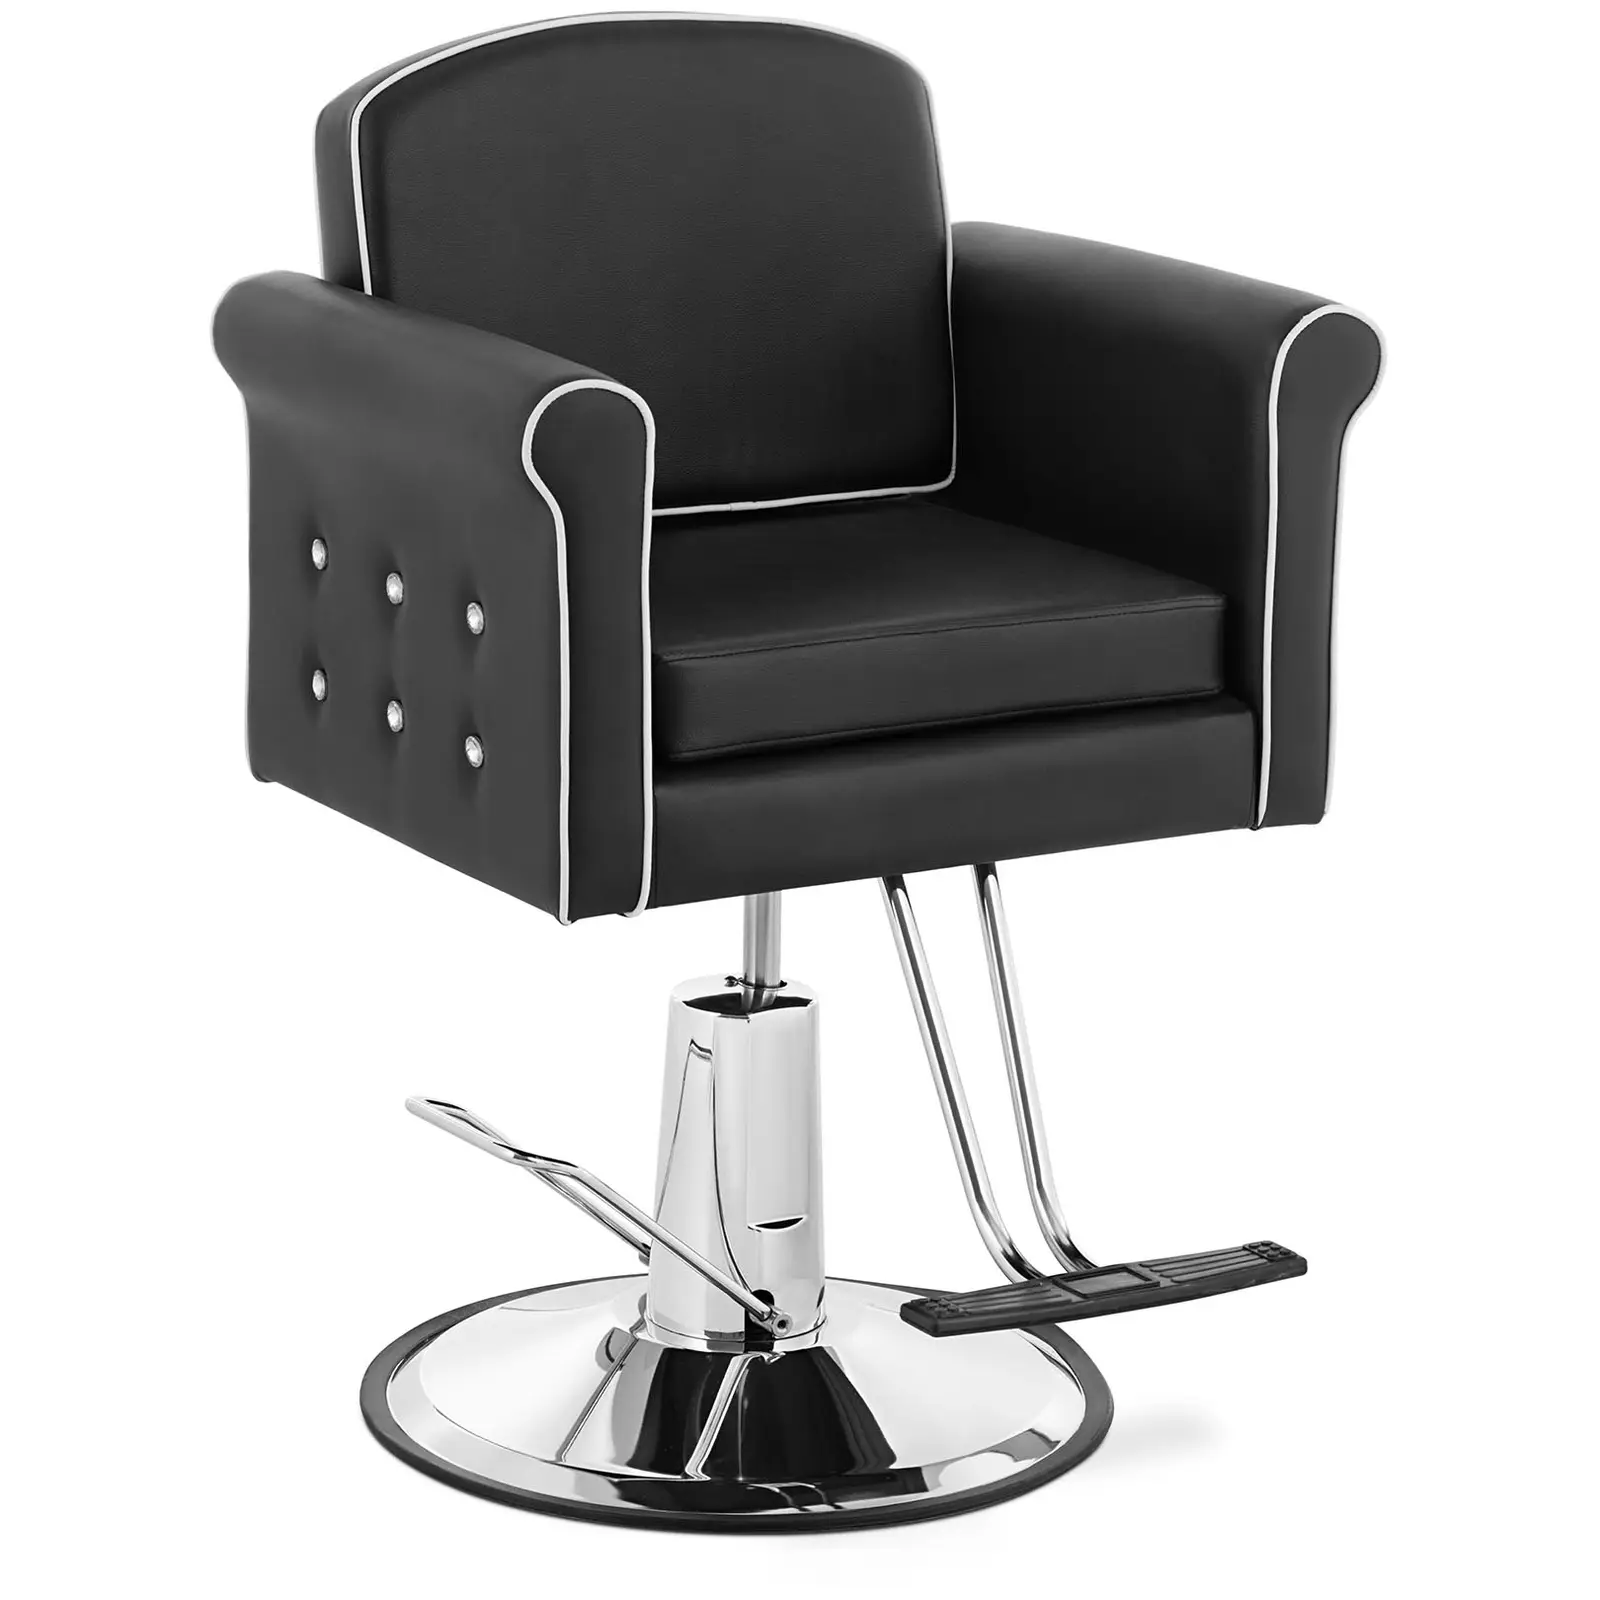 Salonska stolica s osloncem za noge - 520 - 630 mm - 150 kg - crna